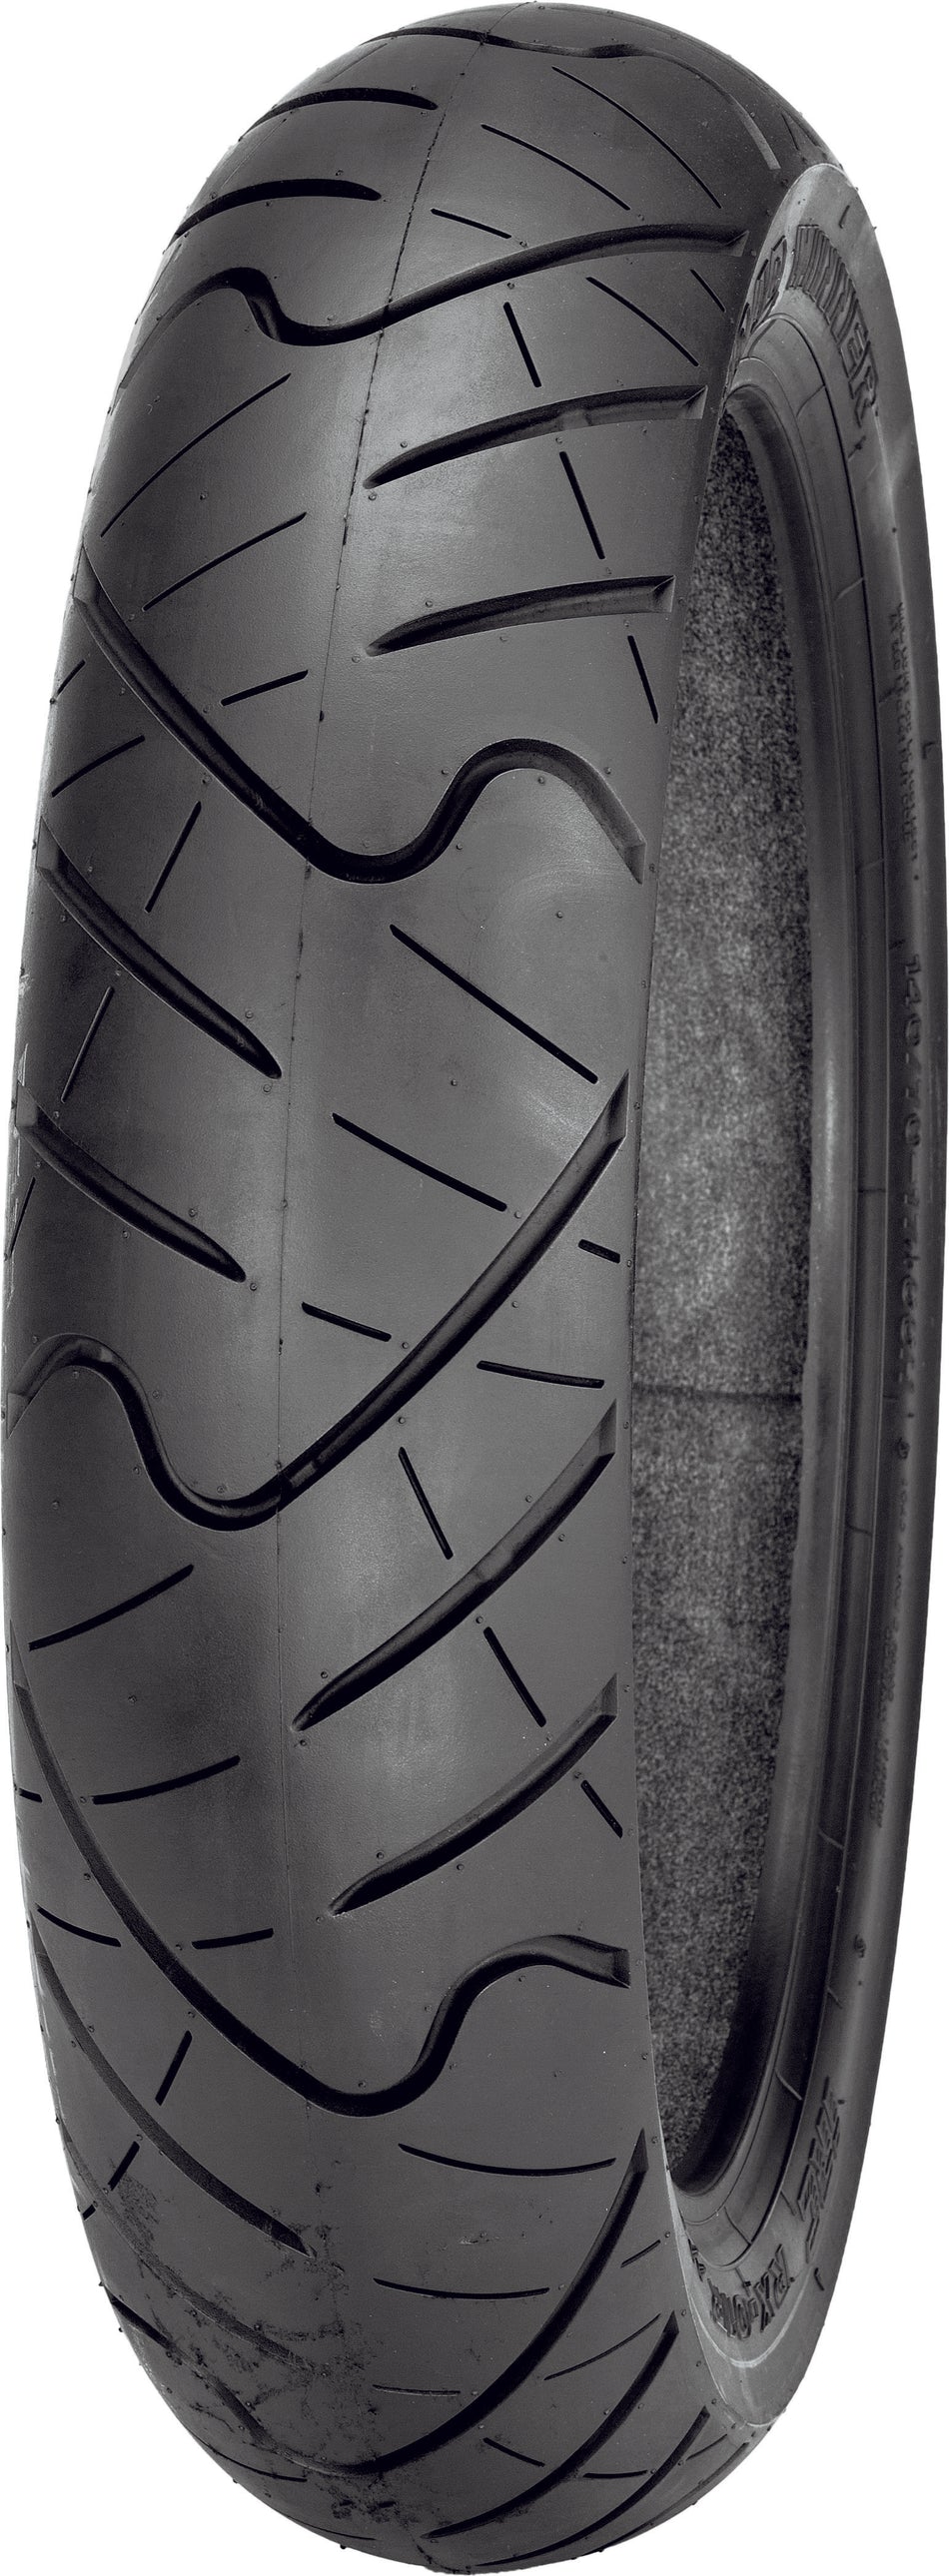 IRC Tire Rx-01 Rear 140/70-17 66s Bias T10306